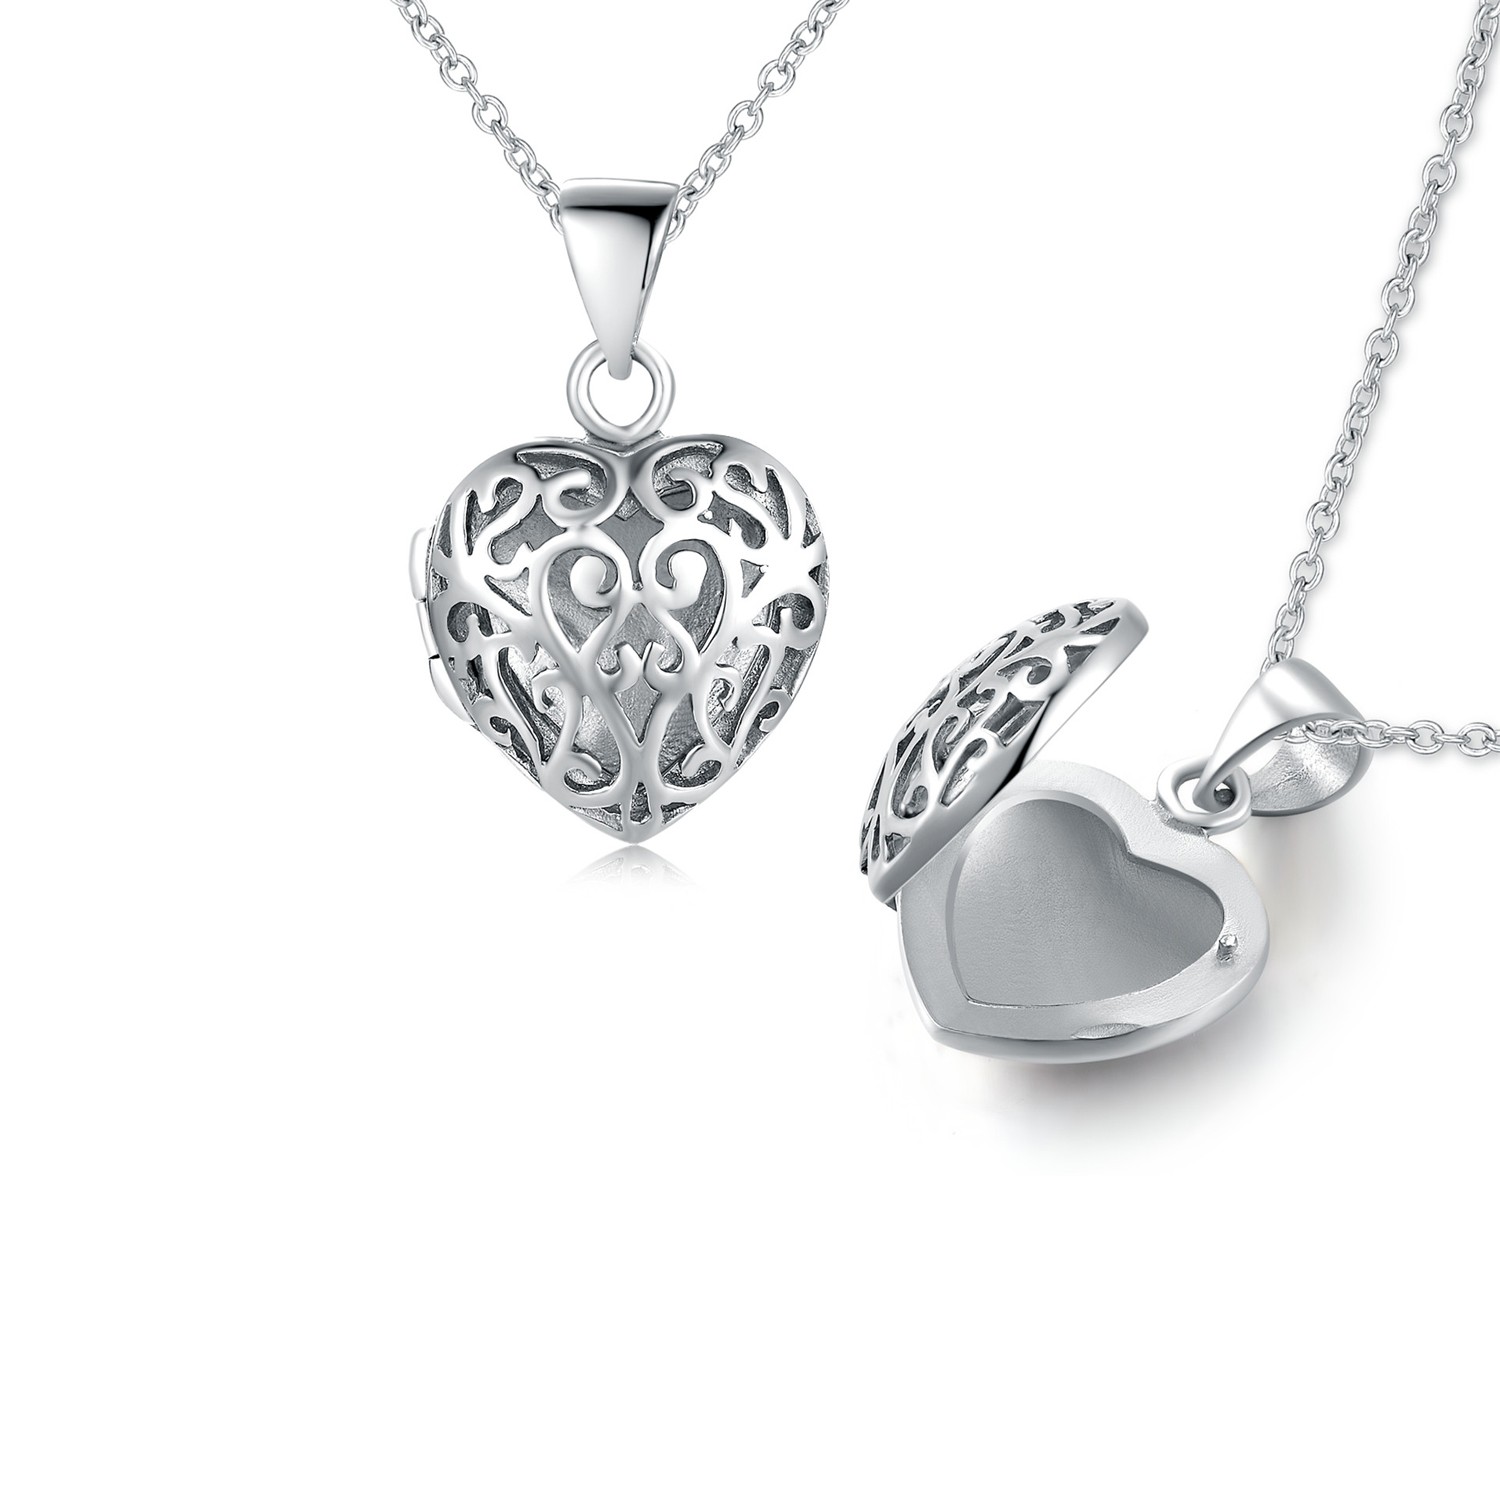  Manufacturer hot sale  925 Silver personalized Photo Locket hollow heart shape pendant necklace  